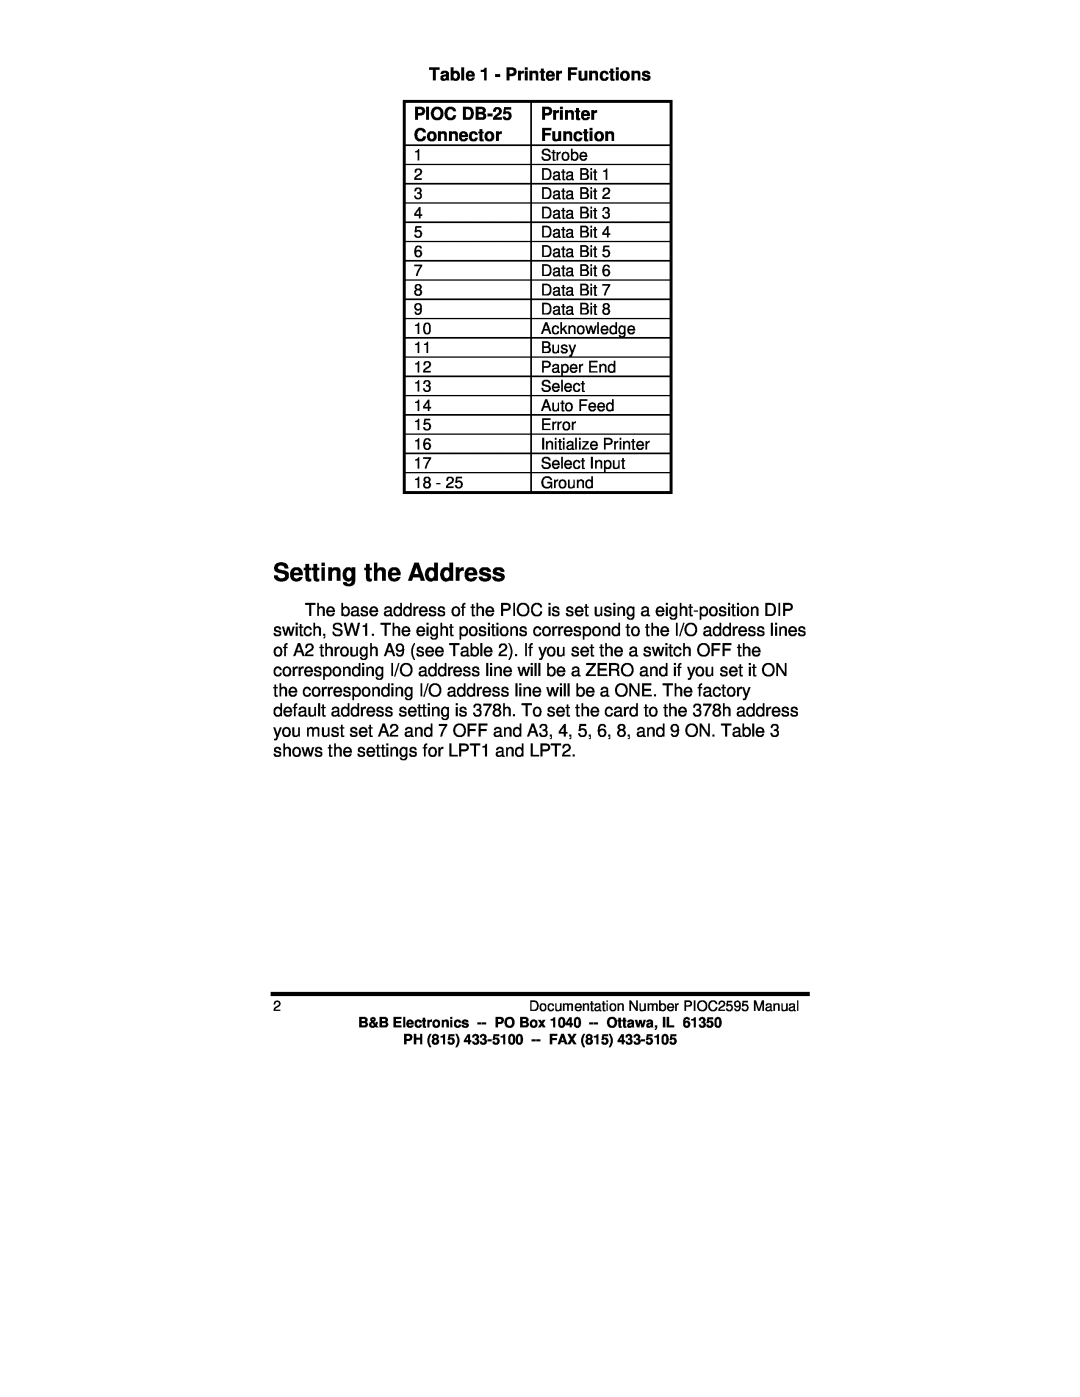 B&B Electronics manual Setting the Address, Printer Functions, PIOC DB-25, Connector 